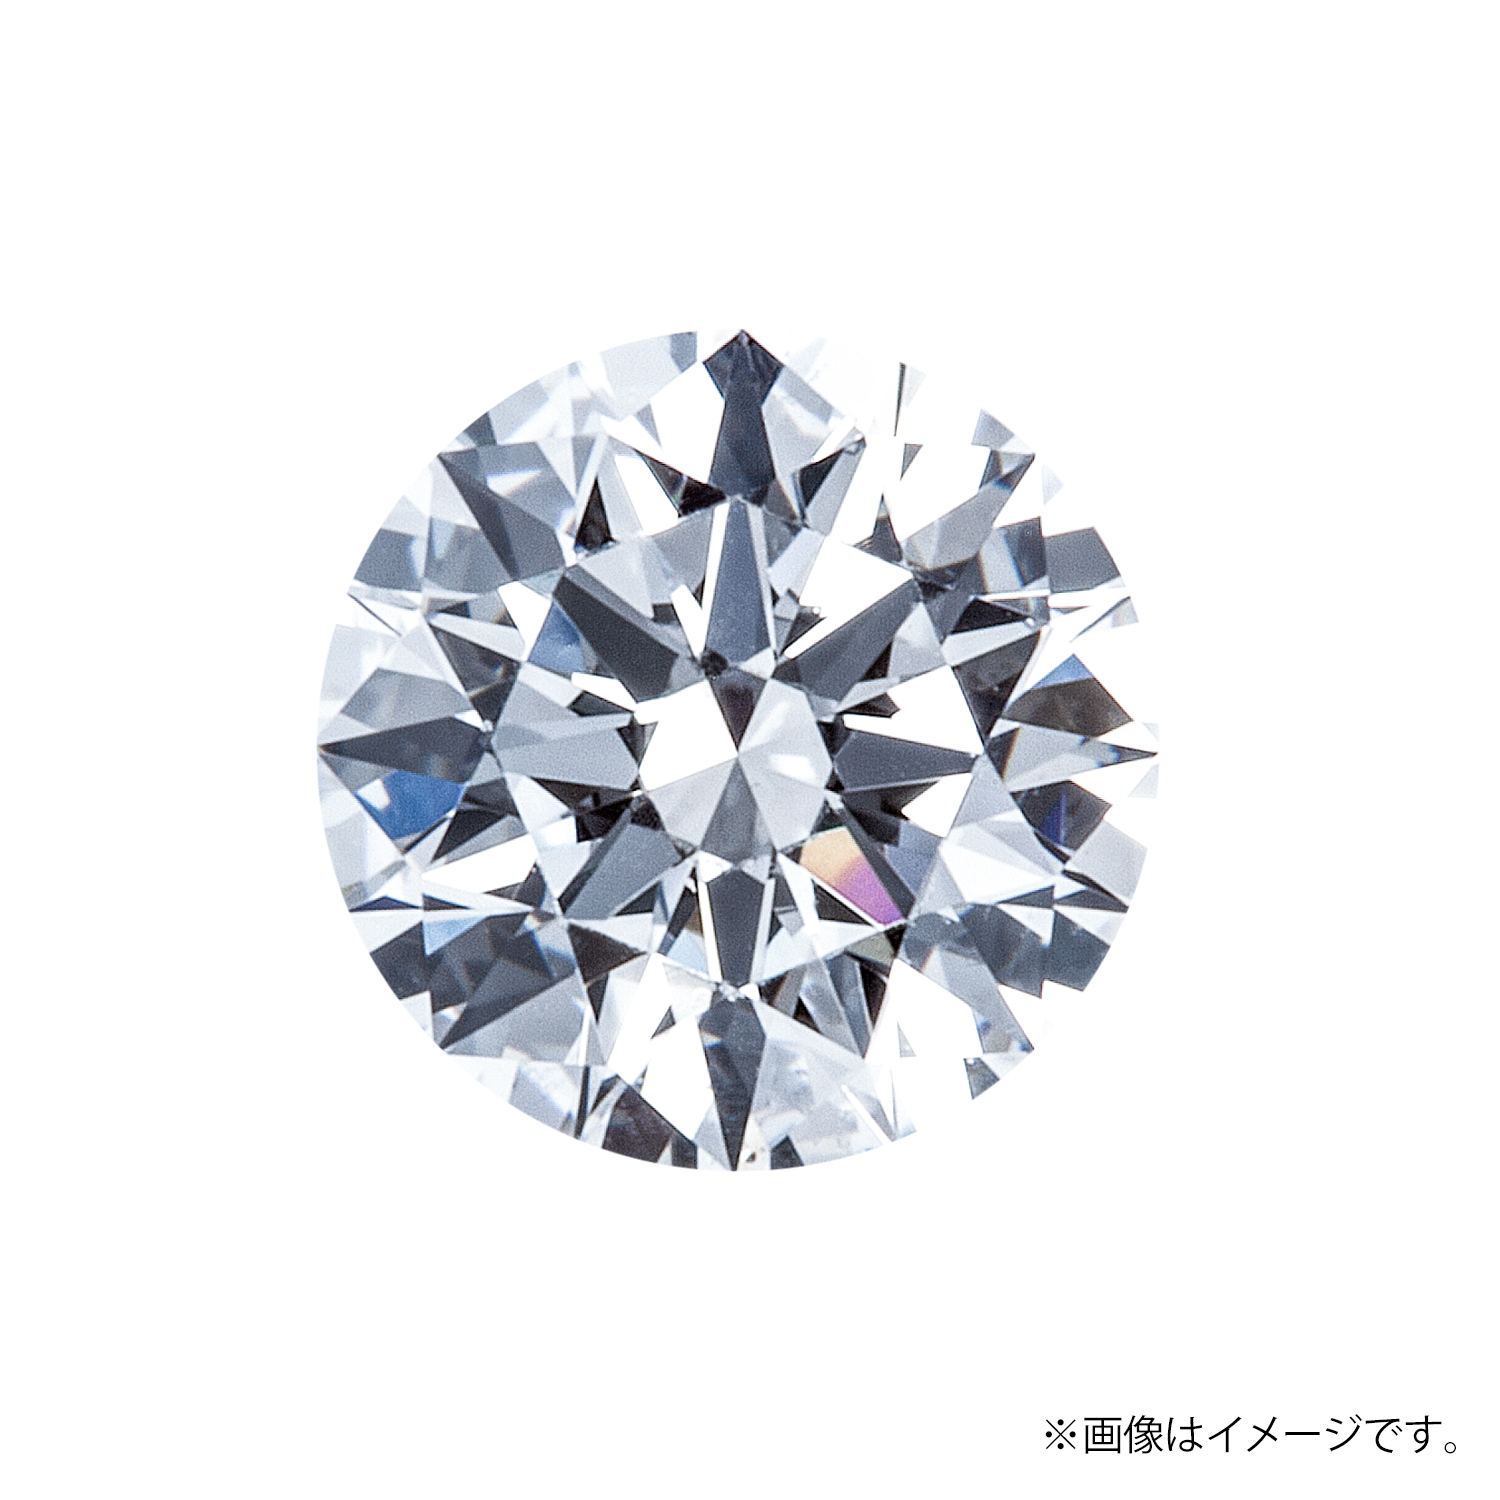 0.212ct Round ダイヤモンド / G / VS1 / EX H&C